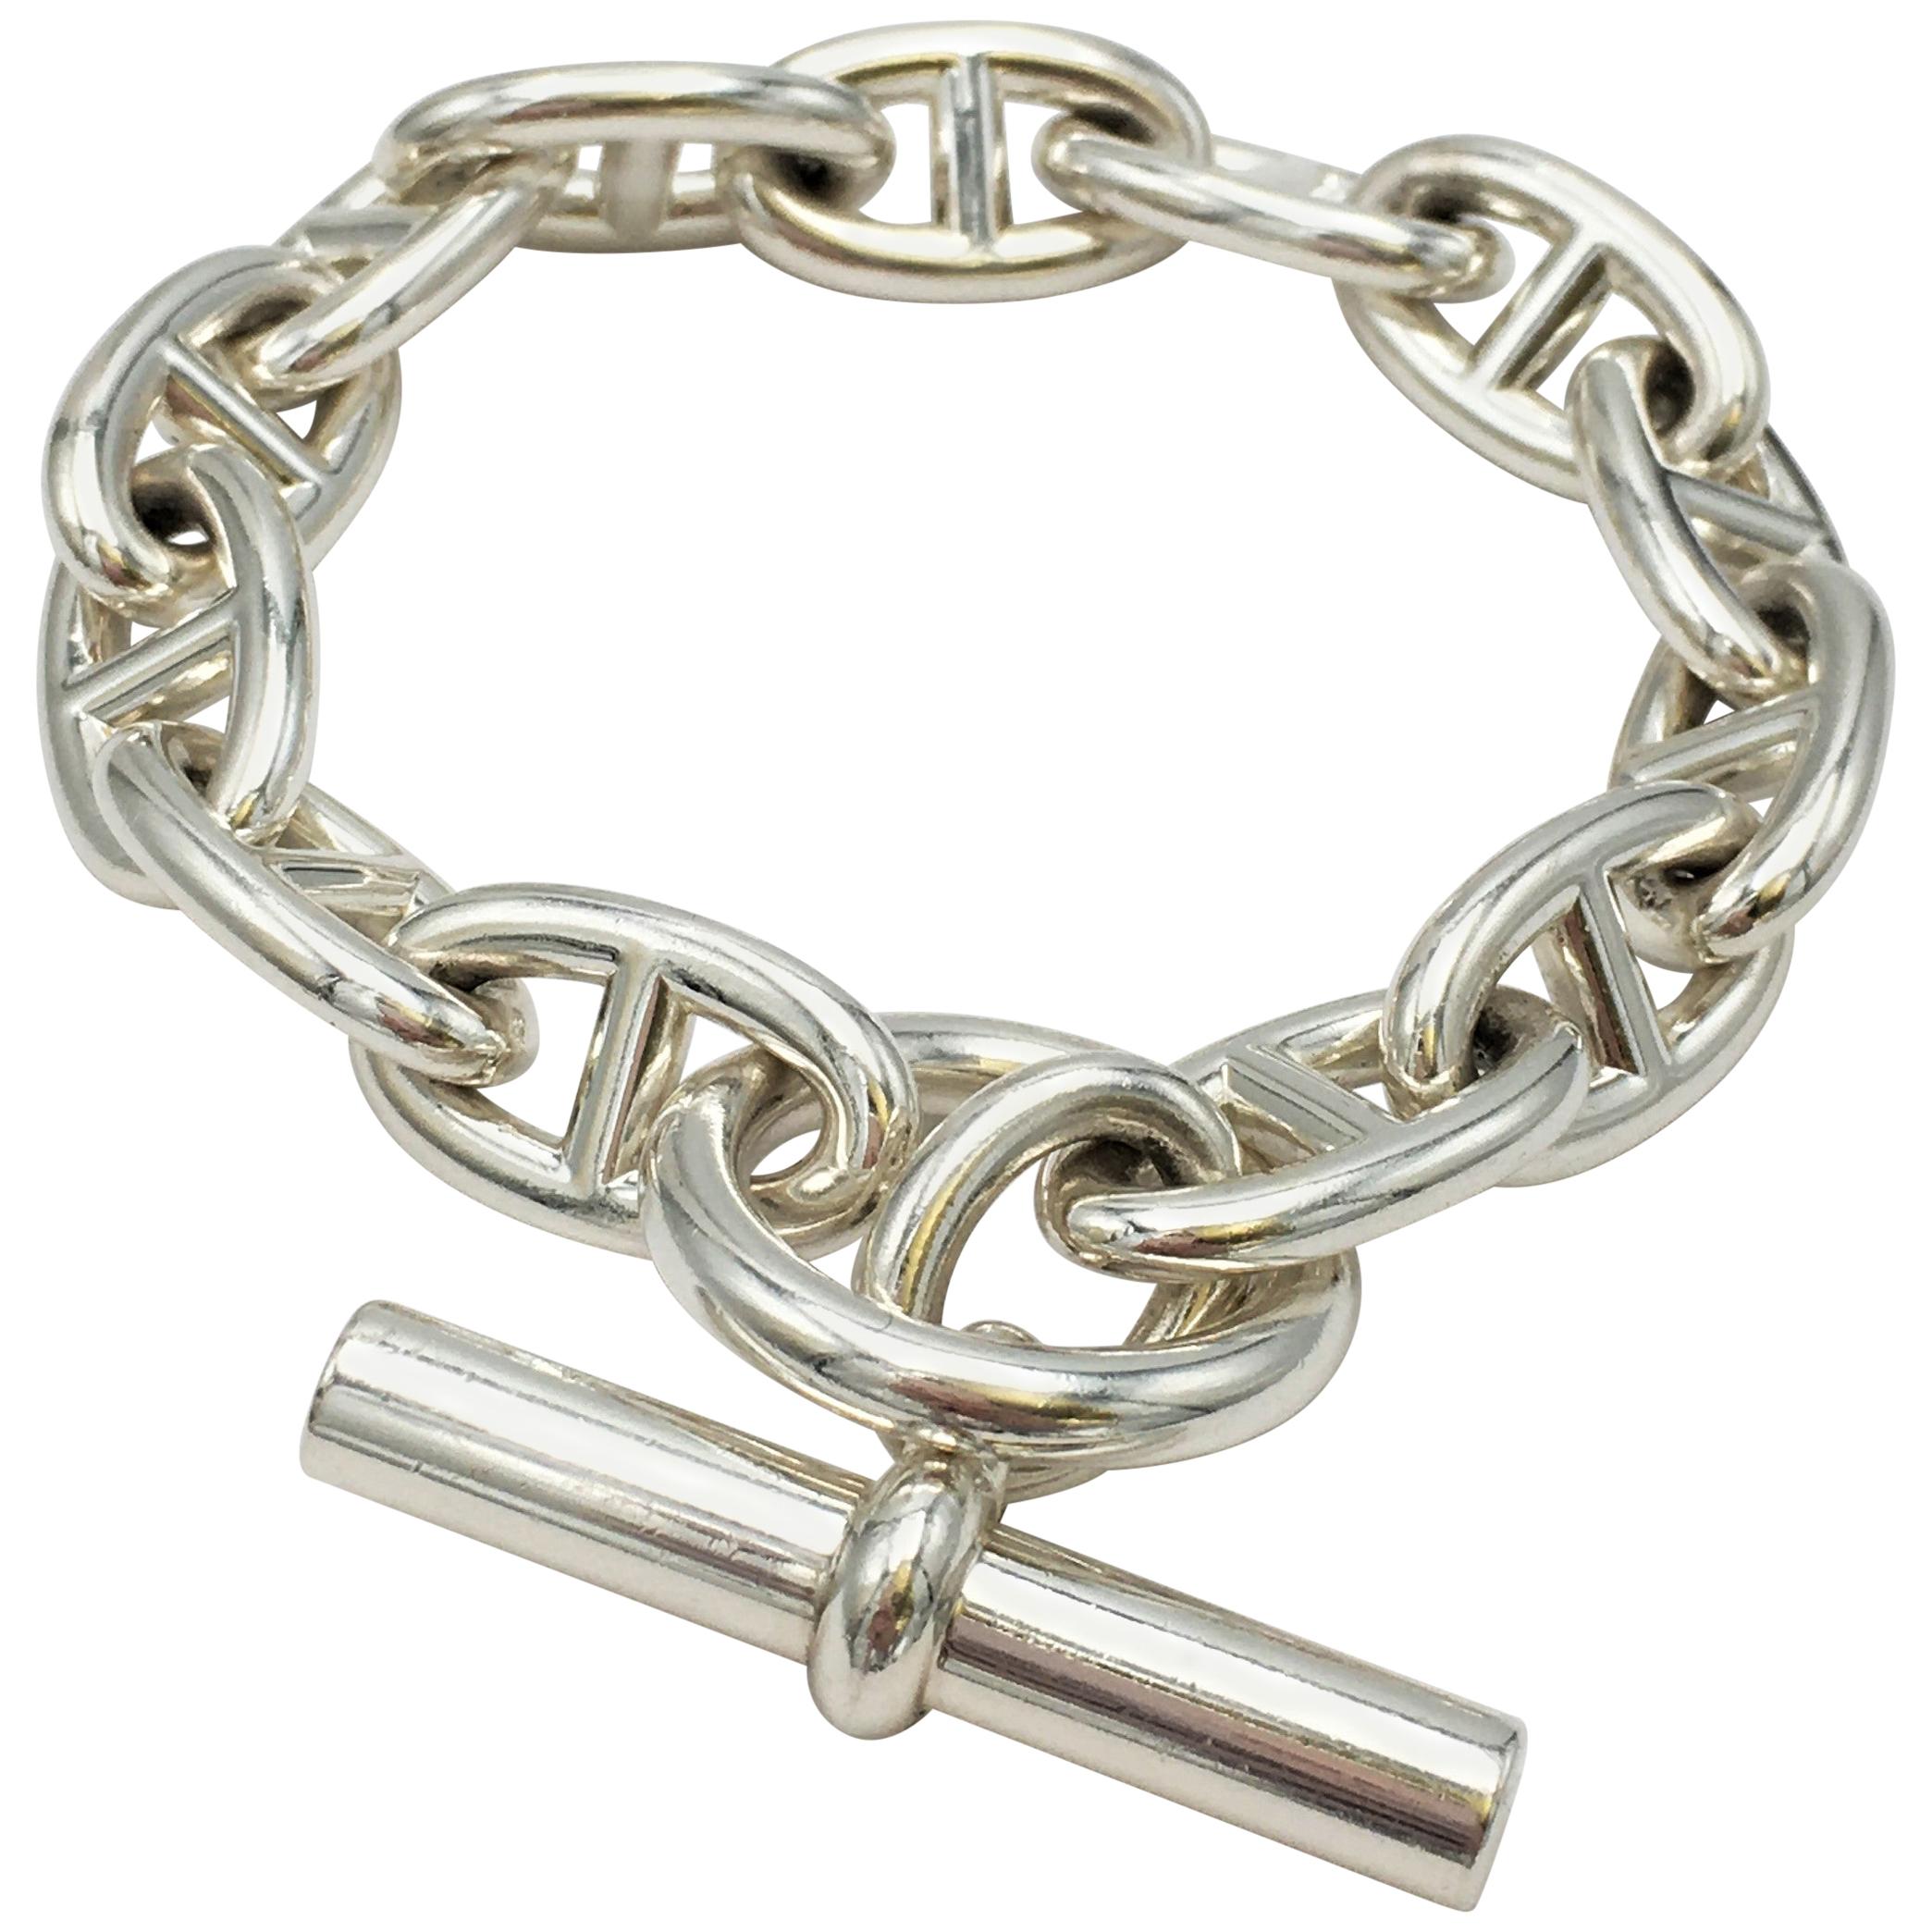 Hermes 'Chaine d'Ancre' Silver Bracelet